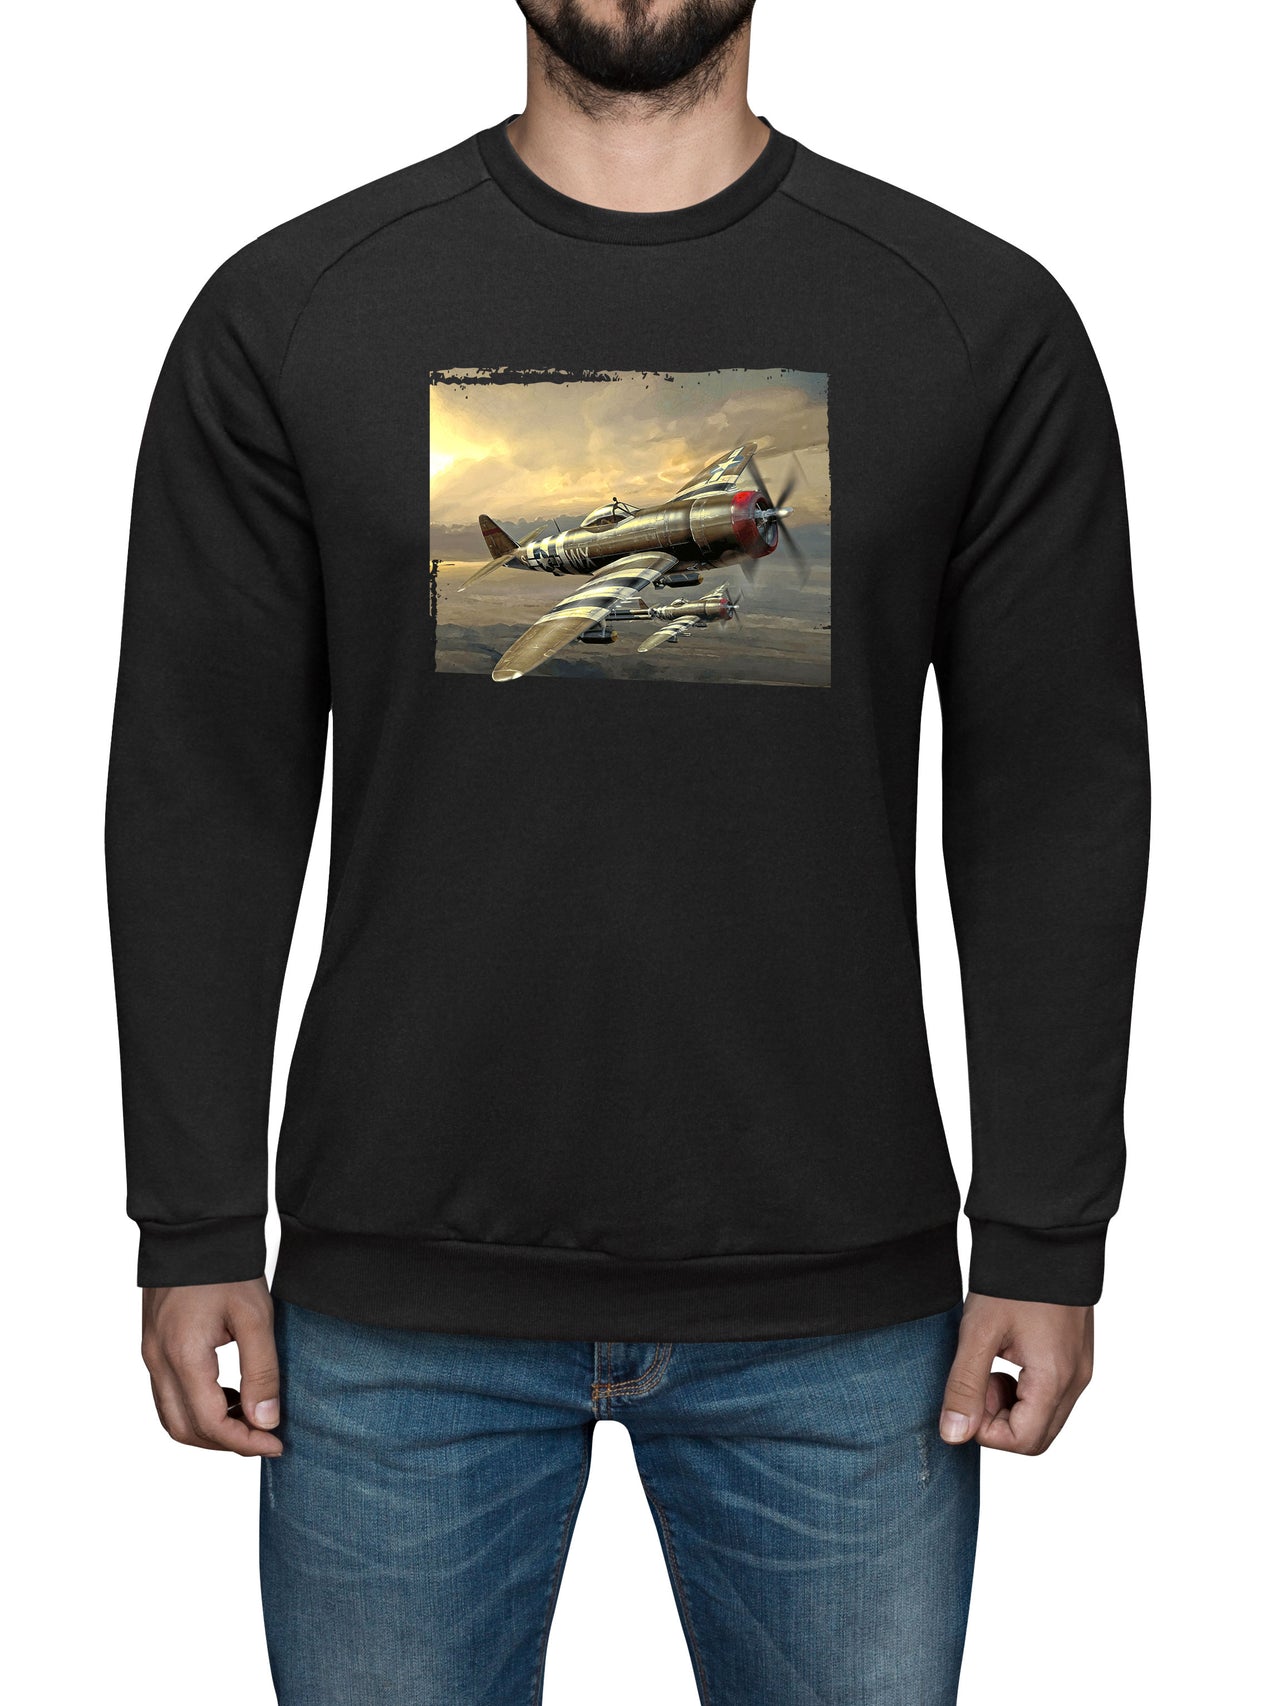 P-47 Thunderbolt 'Jug' - Sweat Shirt